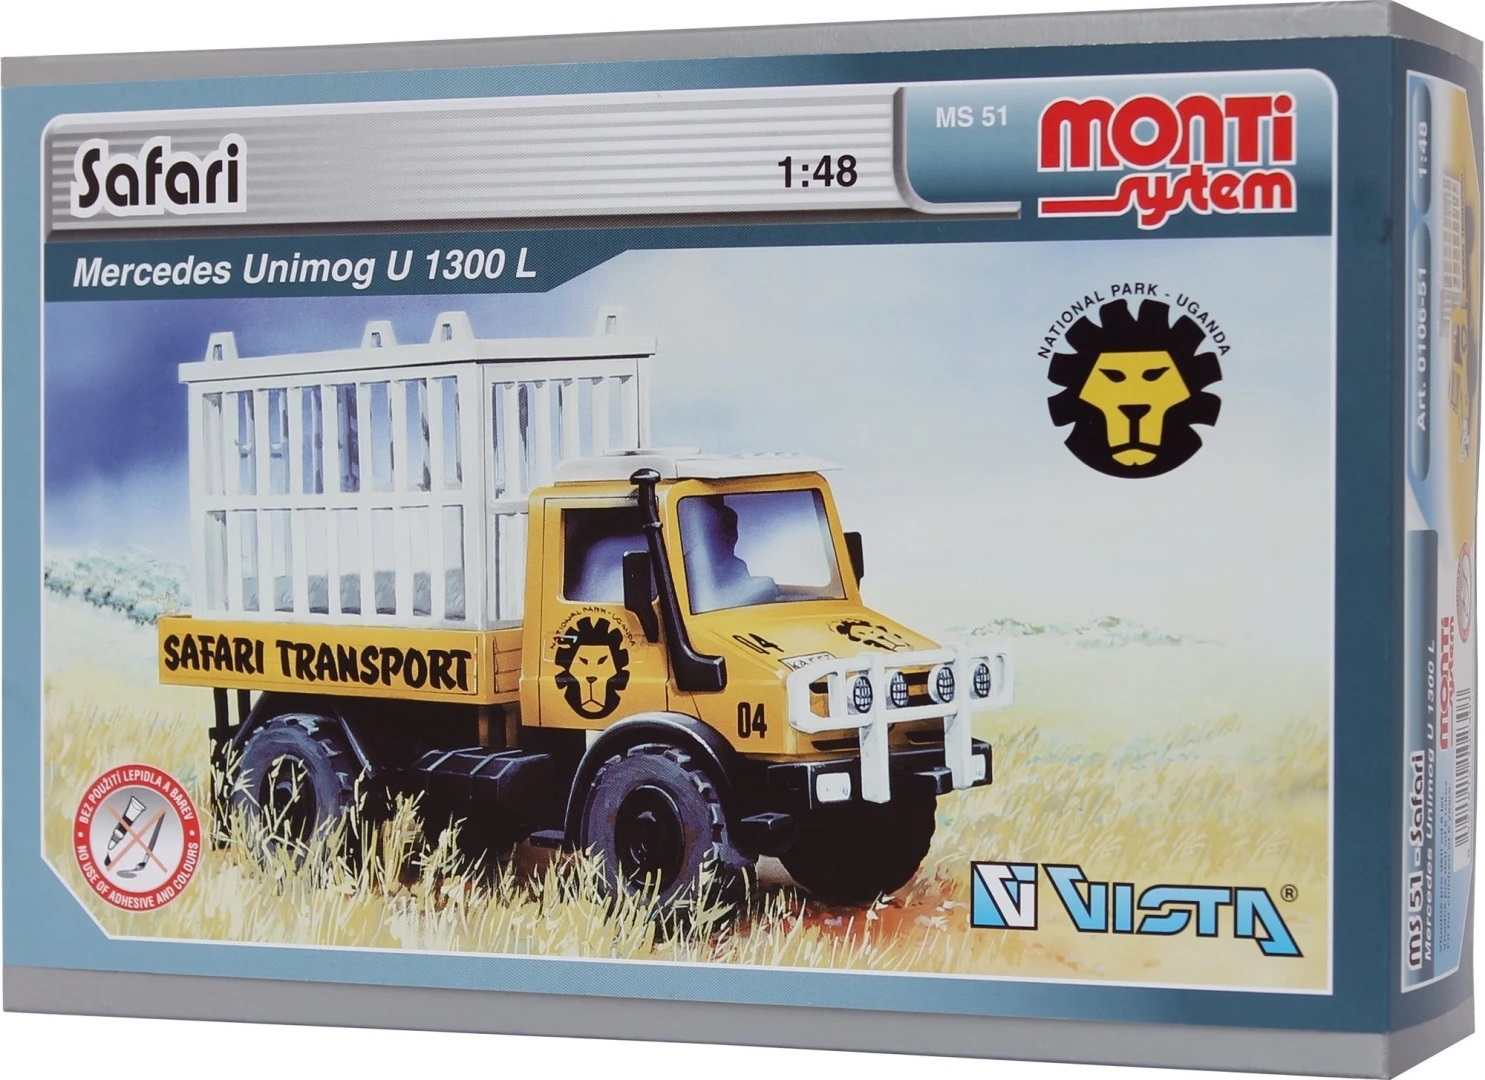 Monti systém 51- Safari